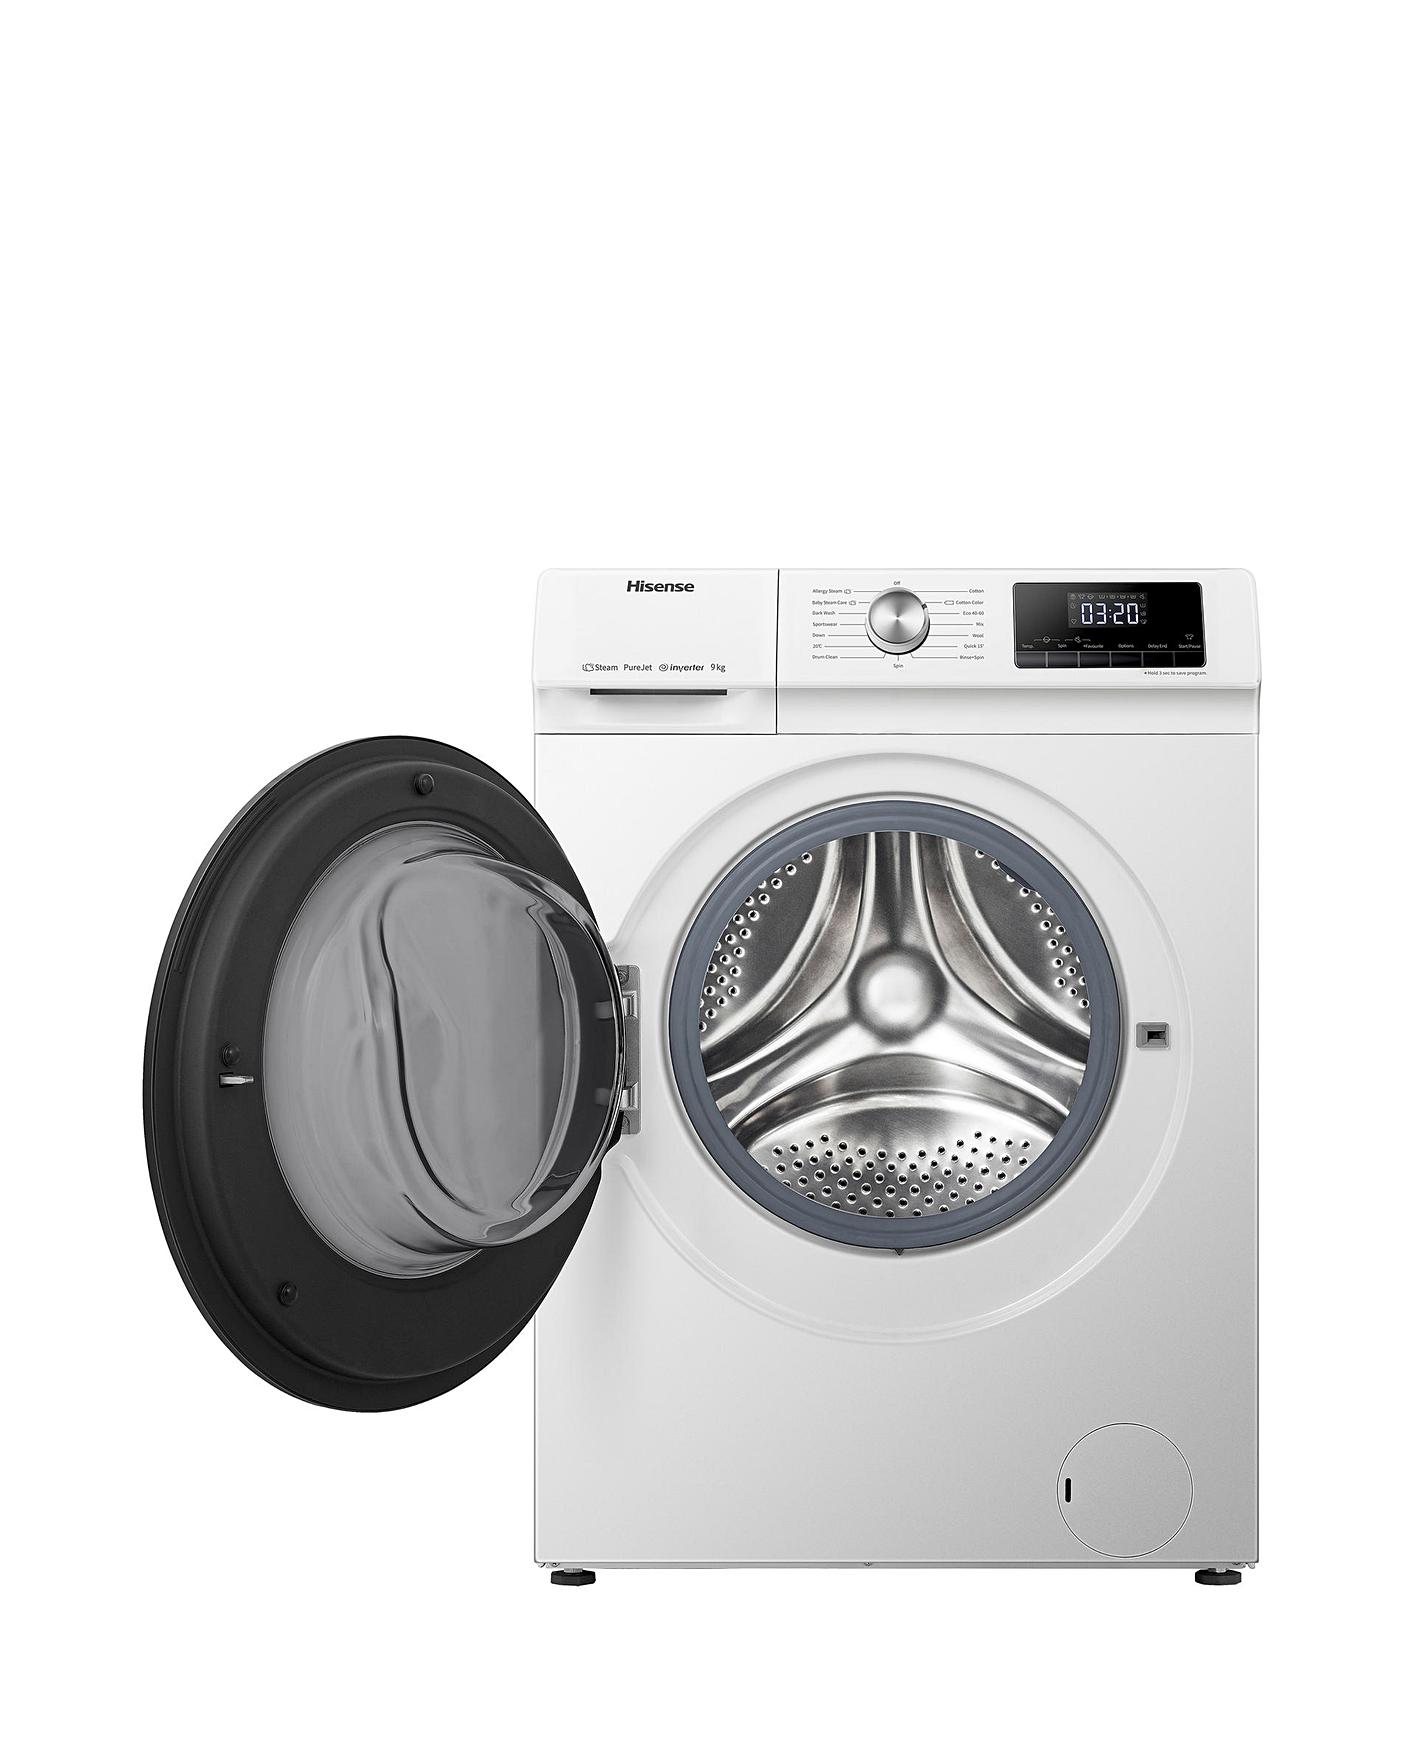 WFQA9014EVJM | Premier Machine Washing 9kg Hisense Man